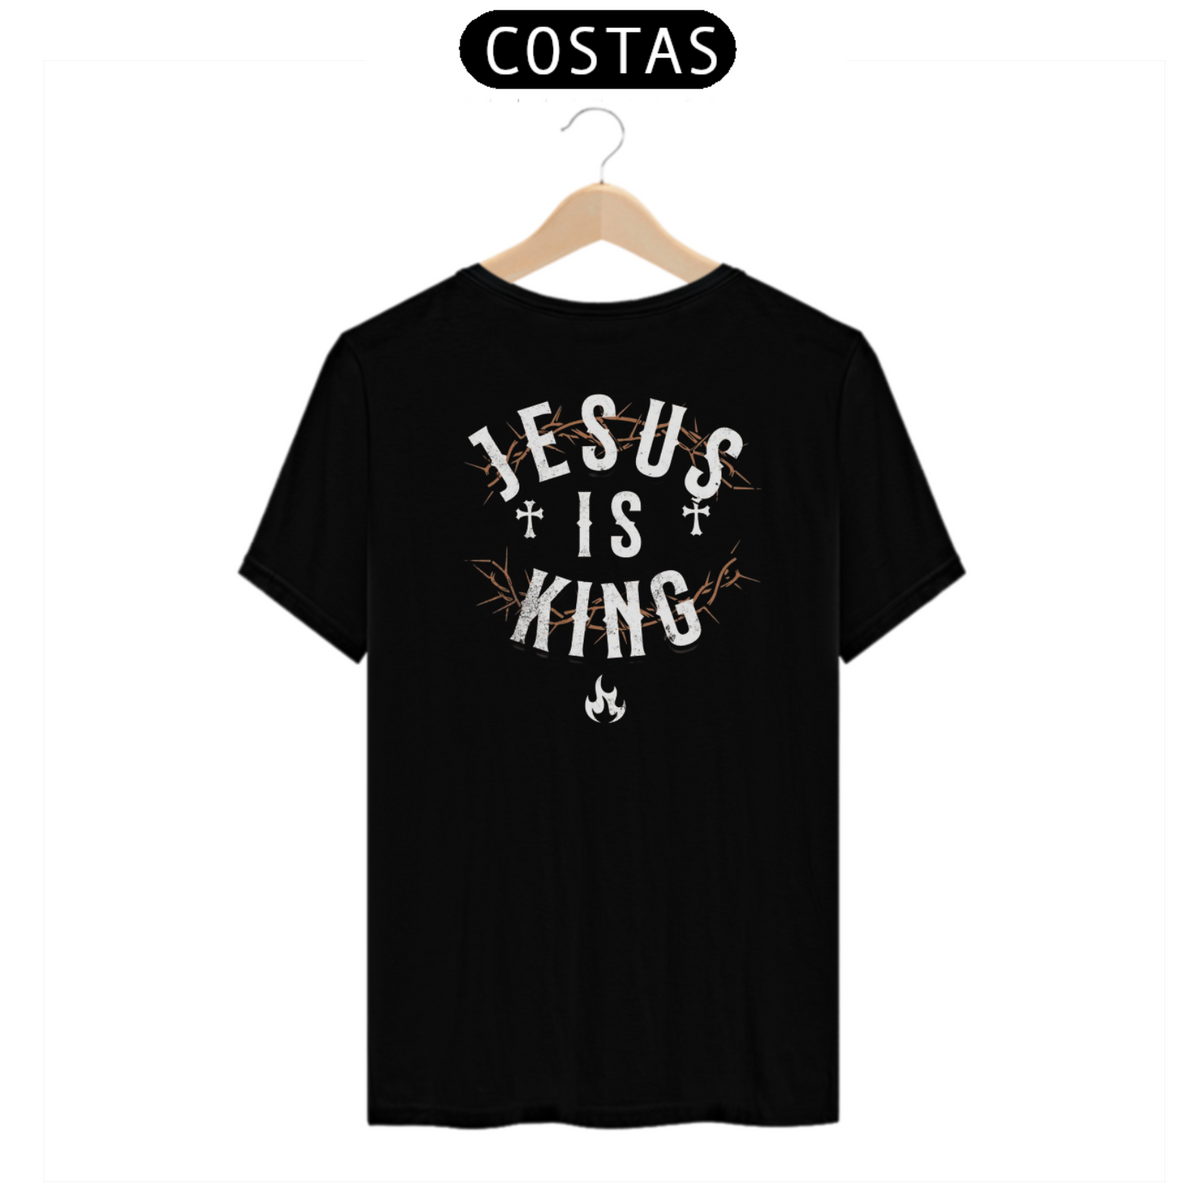 Nome do produto: JESUS IS KING T-shirt